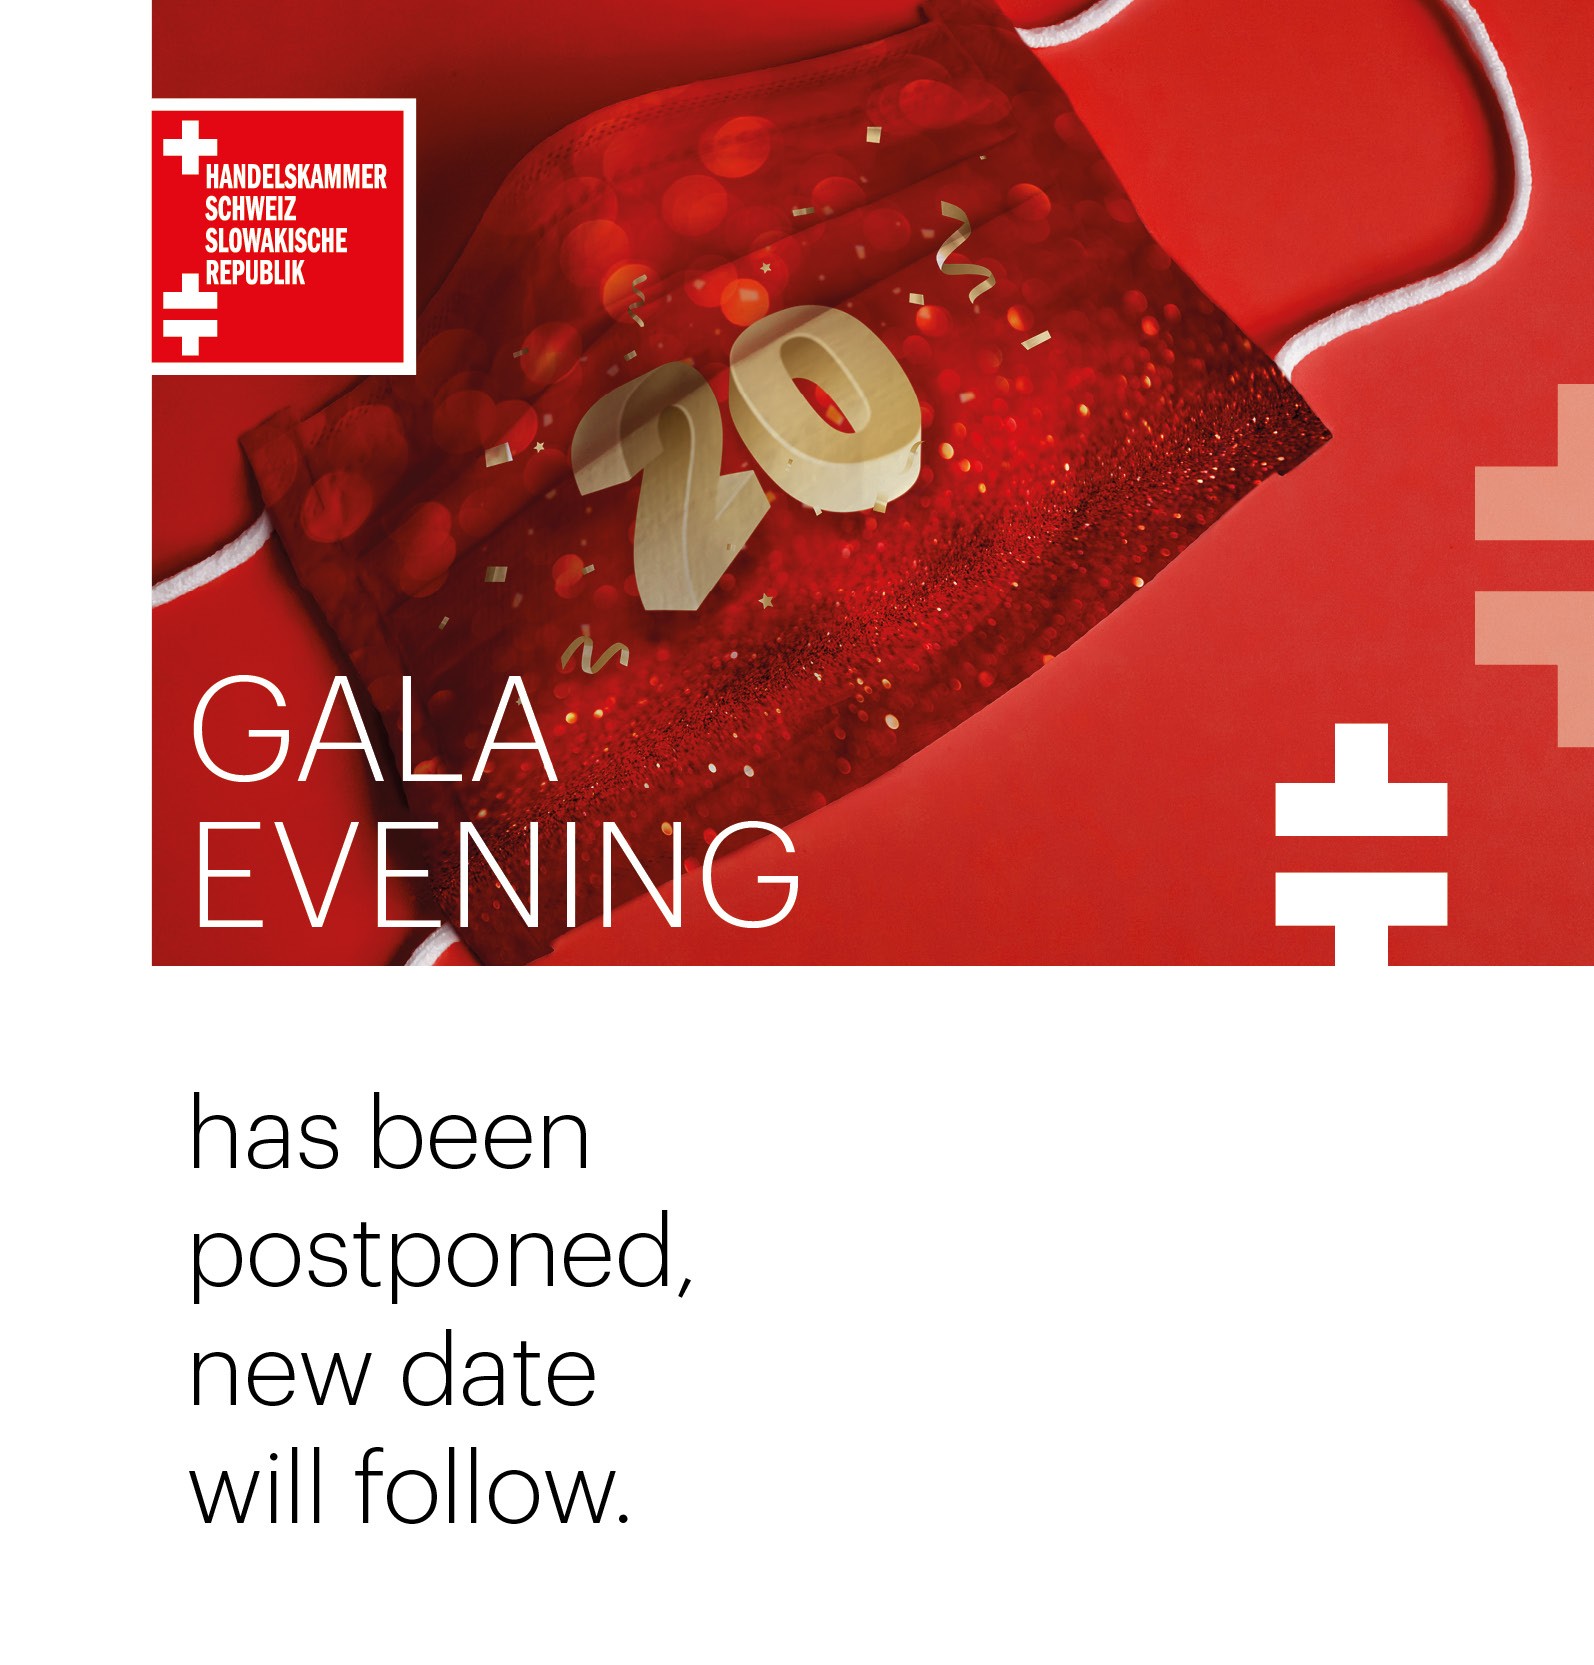 Gala Evening postponed